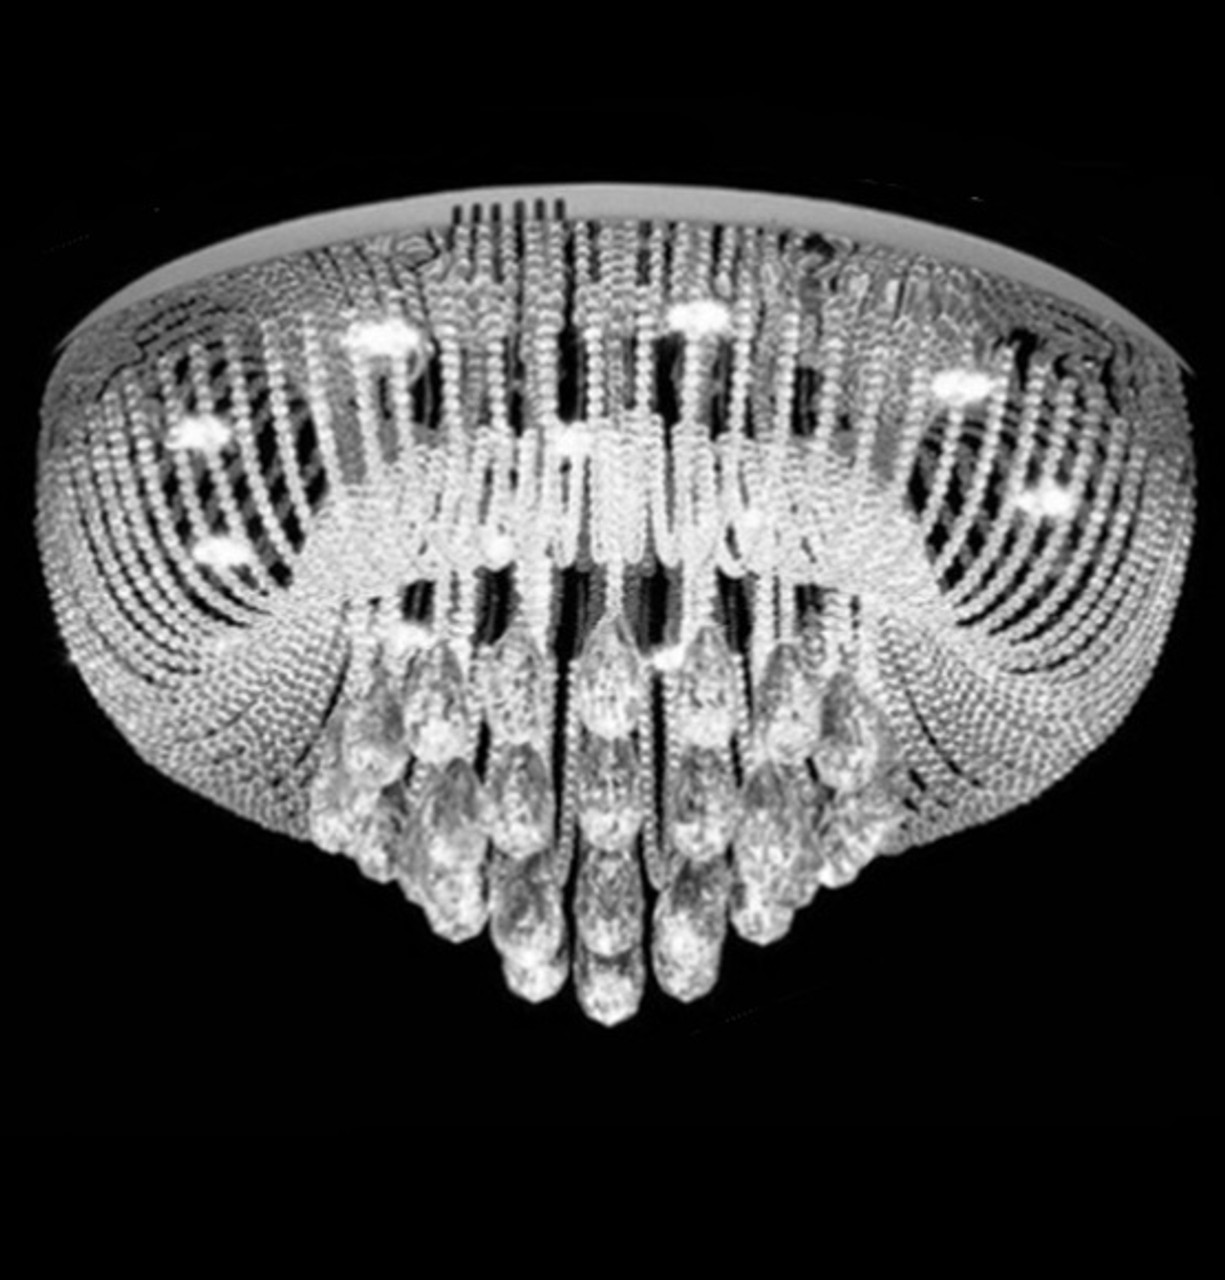 Crystal Chandelier Ceiling Light Fixture Flush Mount Mc35020